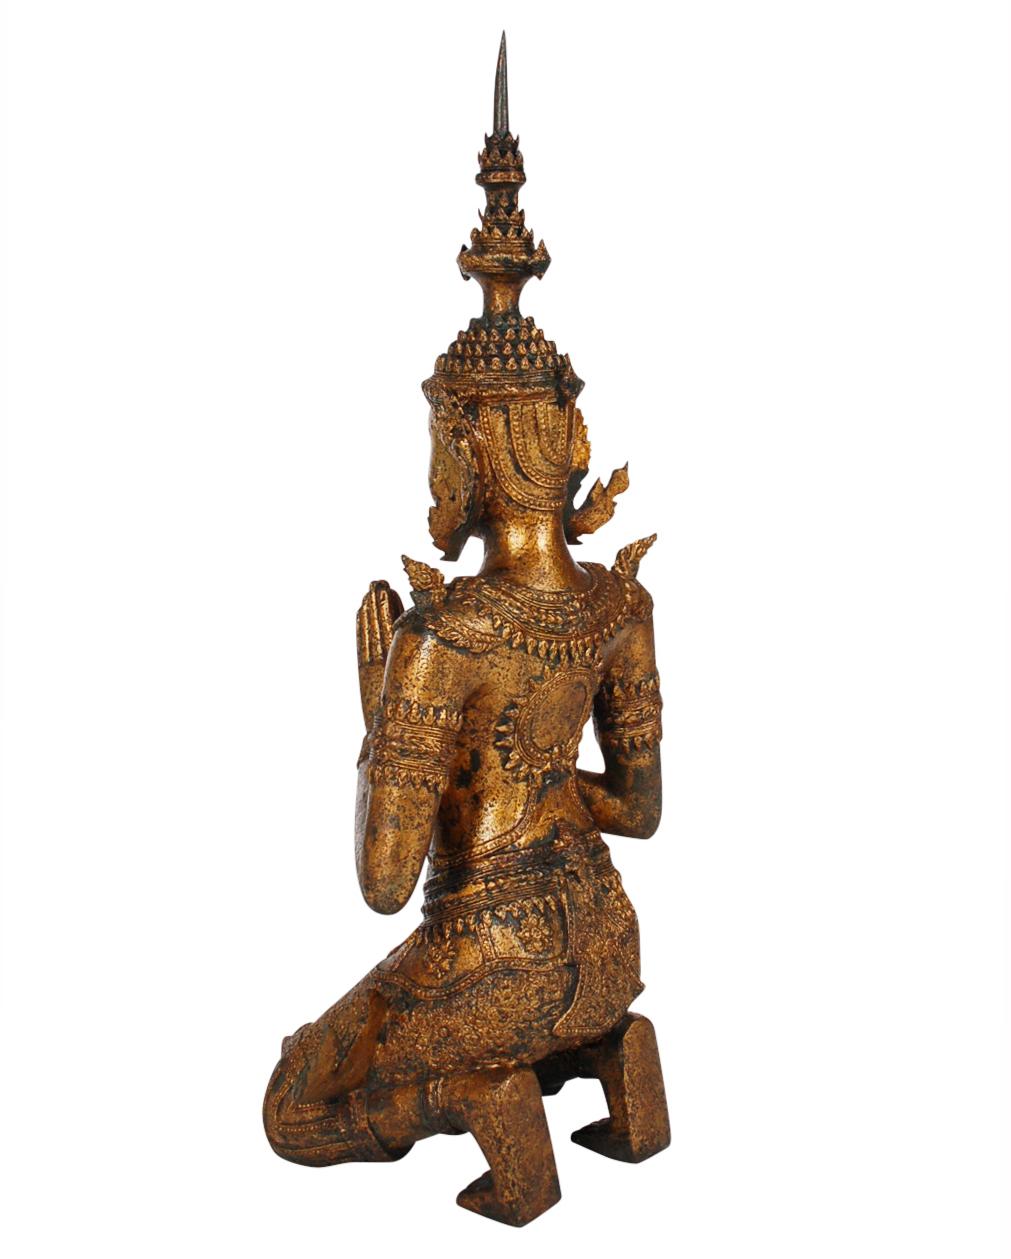 Tibetan Early 20th Century Gold Gilded Bronze Thai Thepenom Buddha Statue or Sculpture